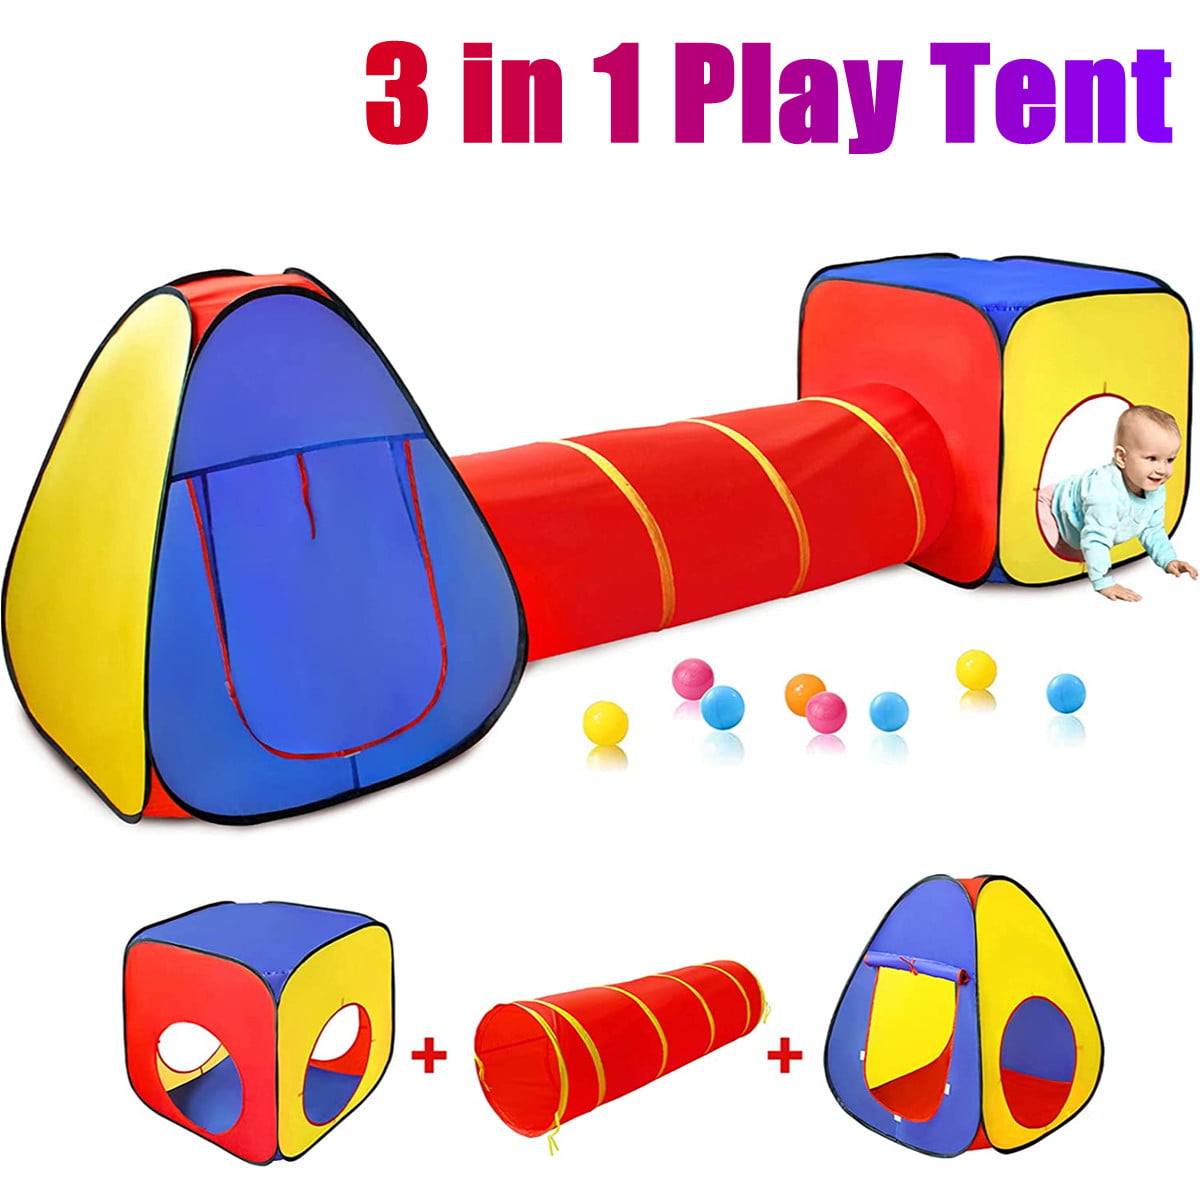 2 in 1 Kids Play Tent Children Indoor Outdoor playhouse tunnel boys girls gift 